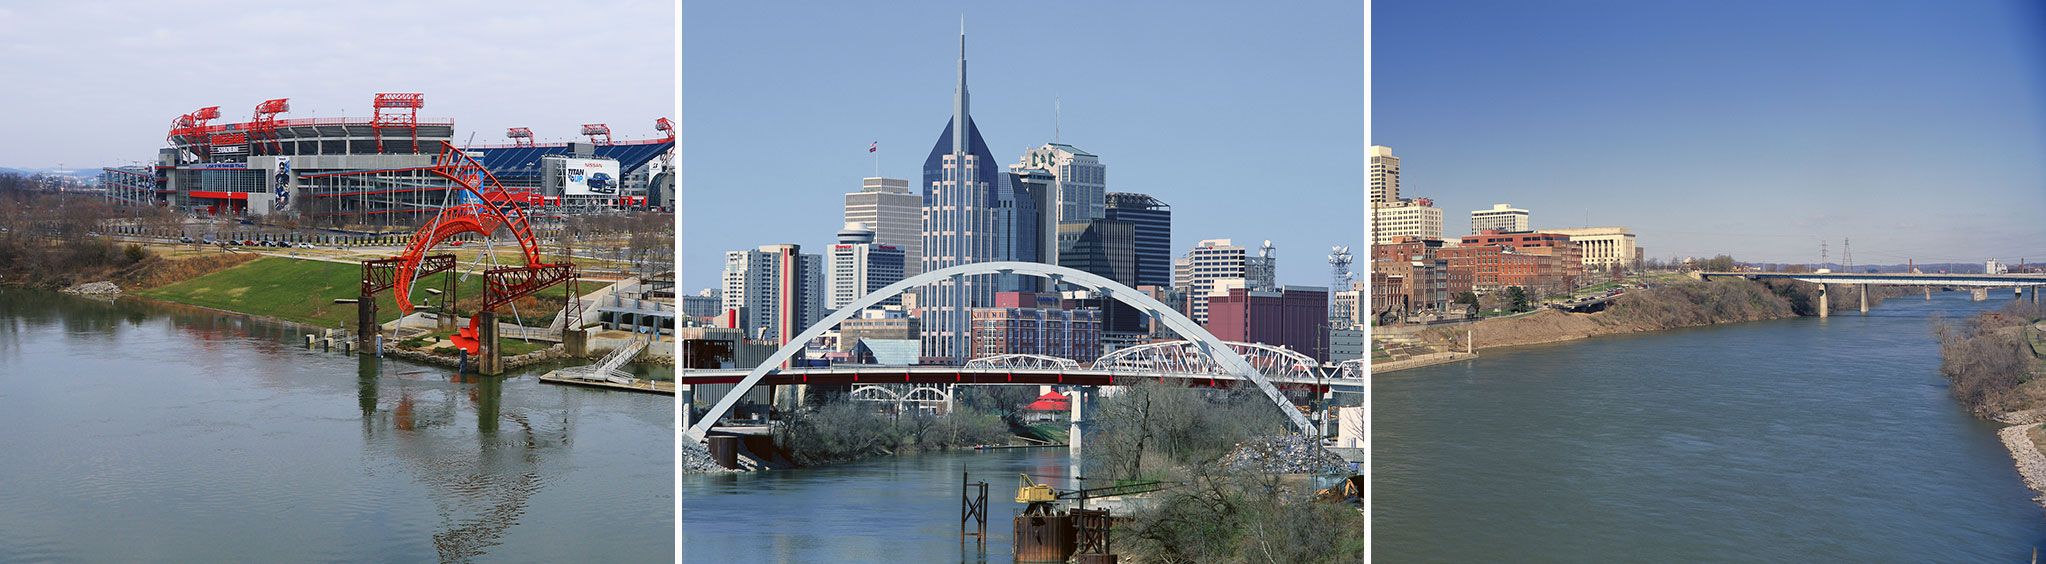 Cumberland River in Nashville, TN